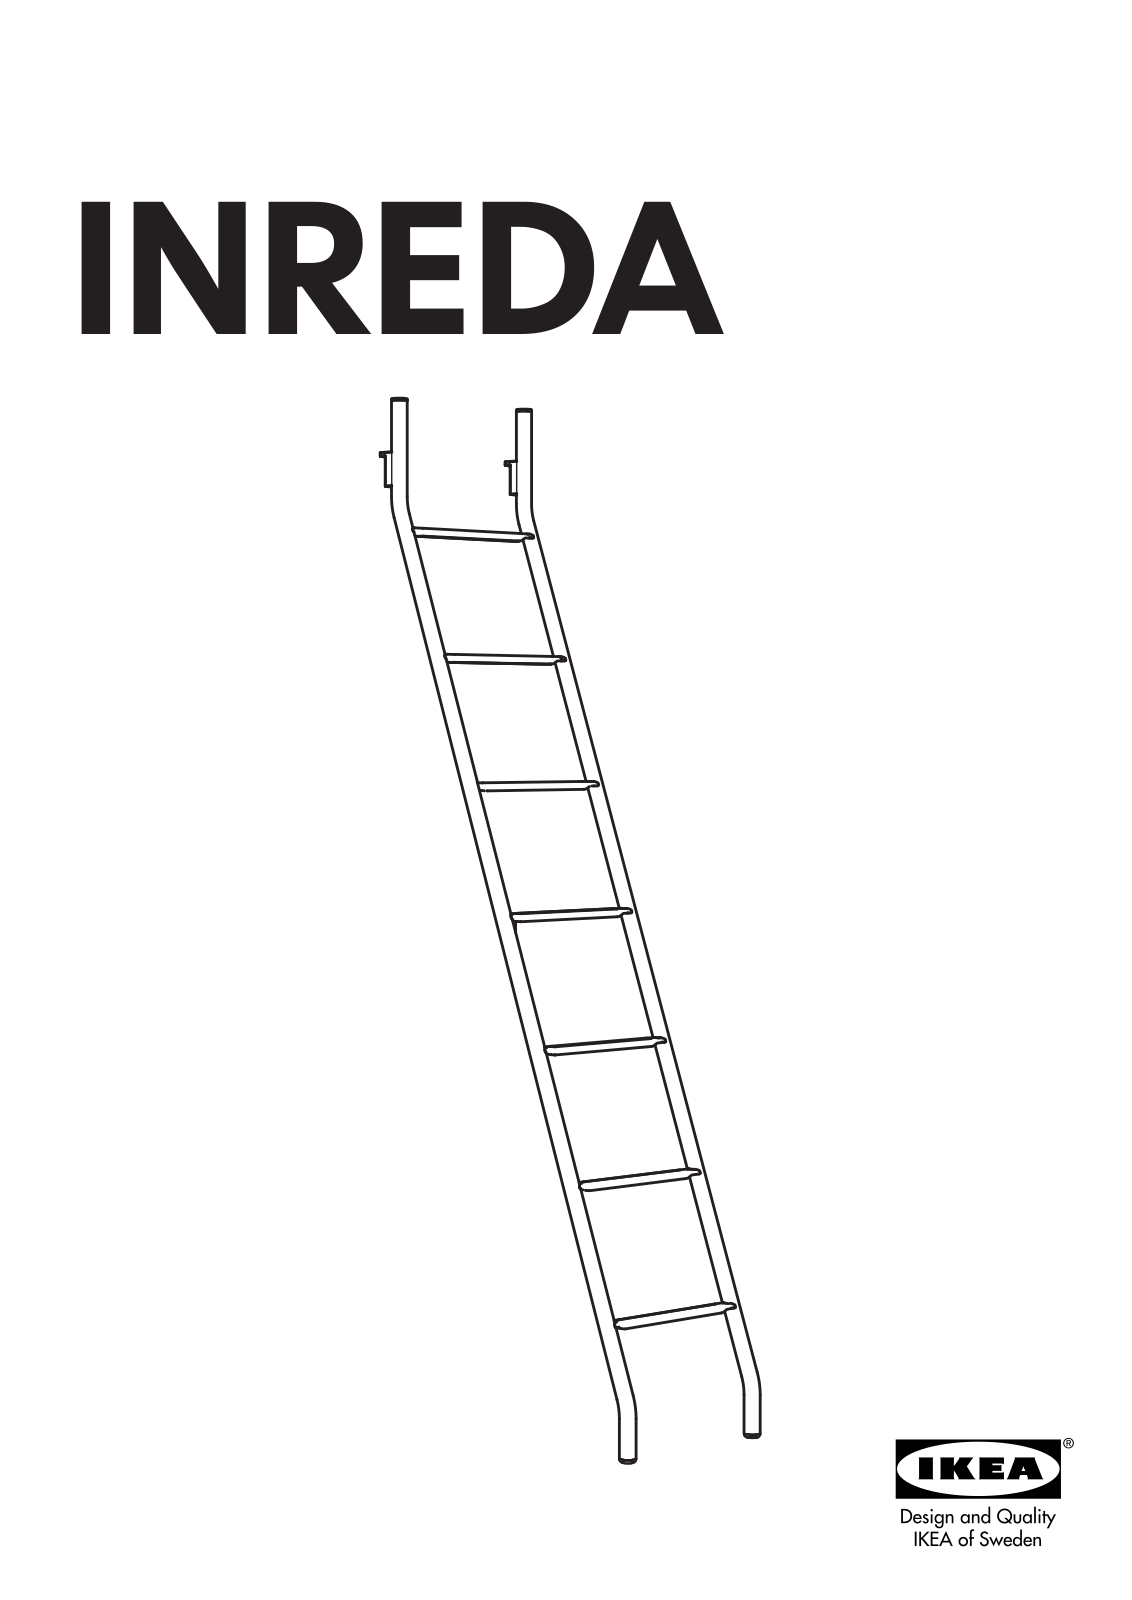 IKEA INREDA LADDER 15 3-8X86 5-8 Assembly Instruction